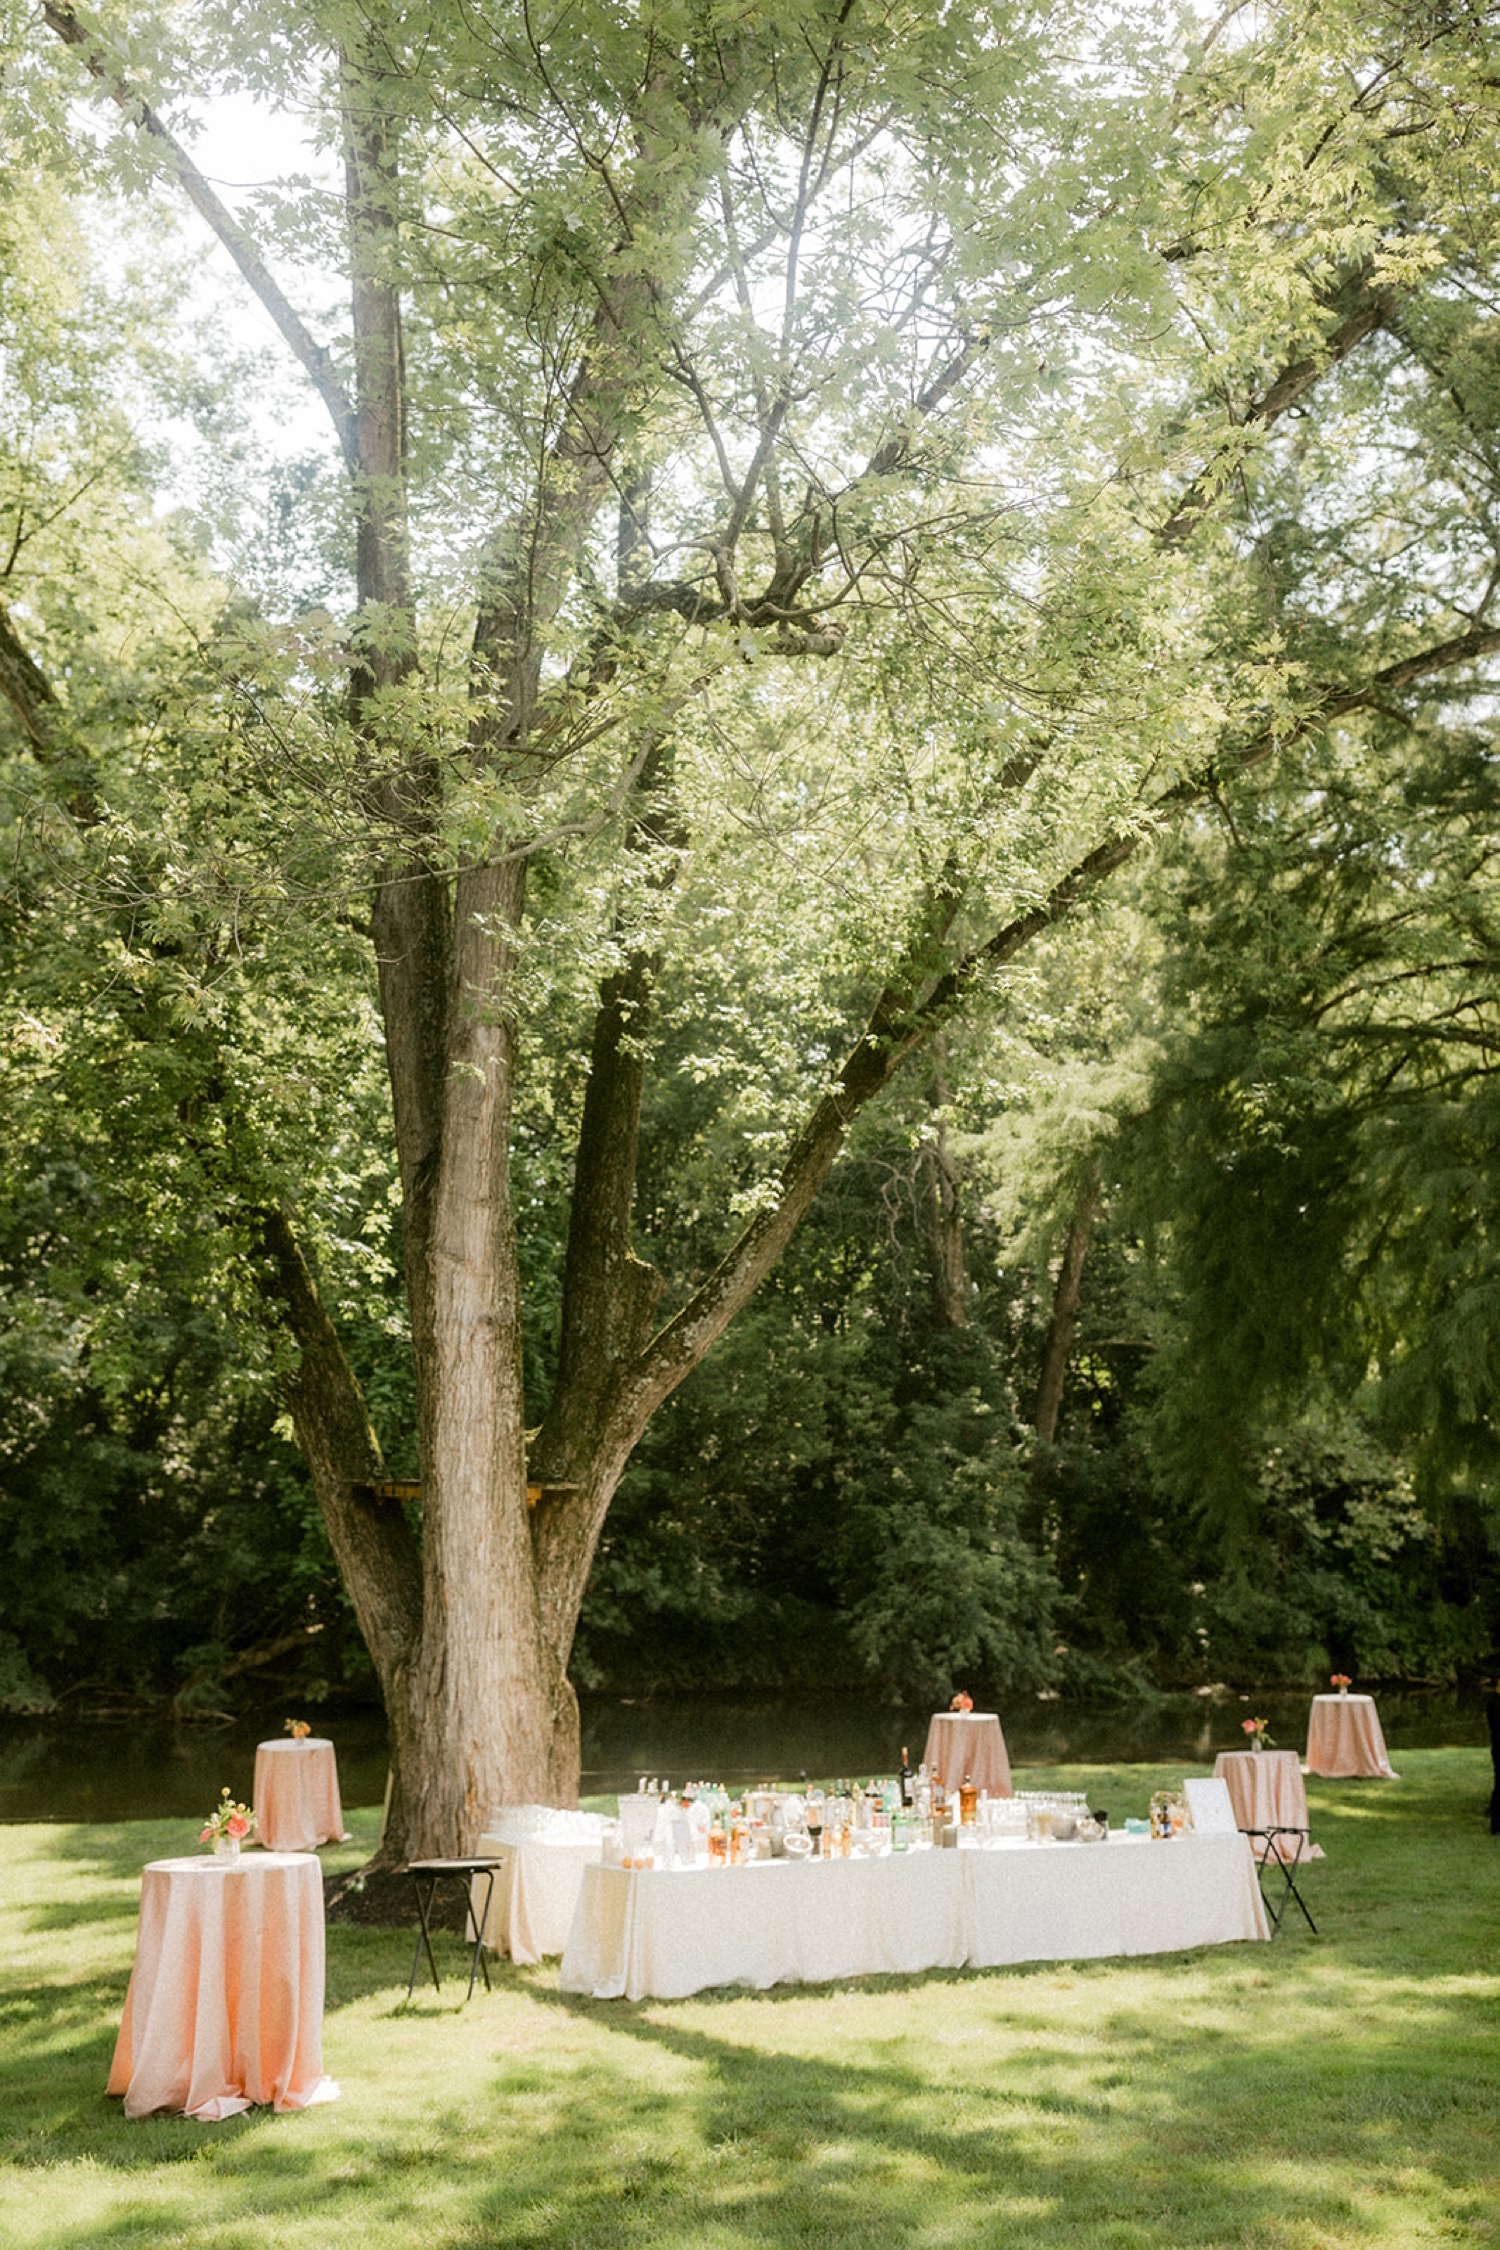 bar and tables under tree dreamy backyard wedding